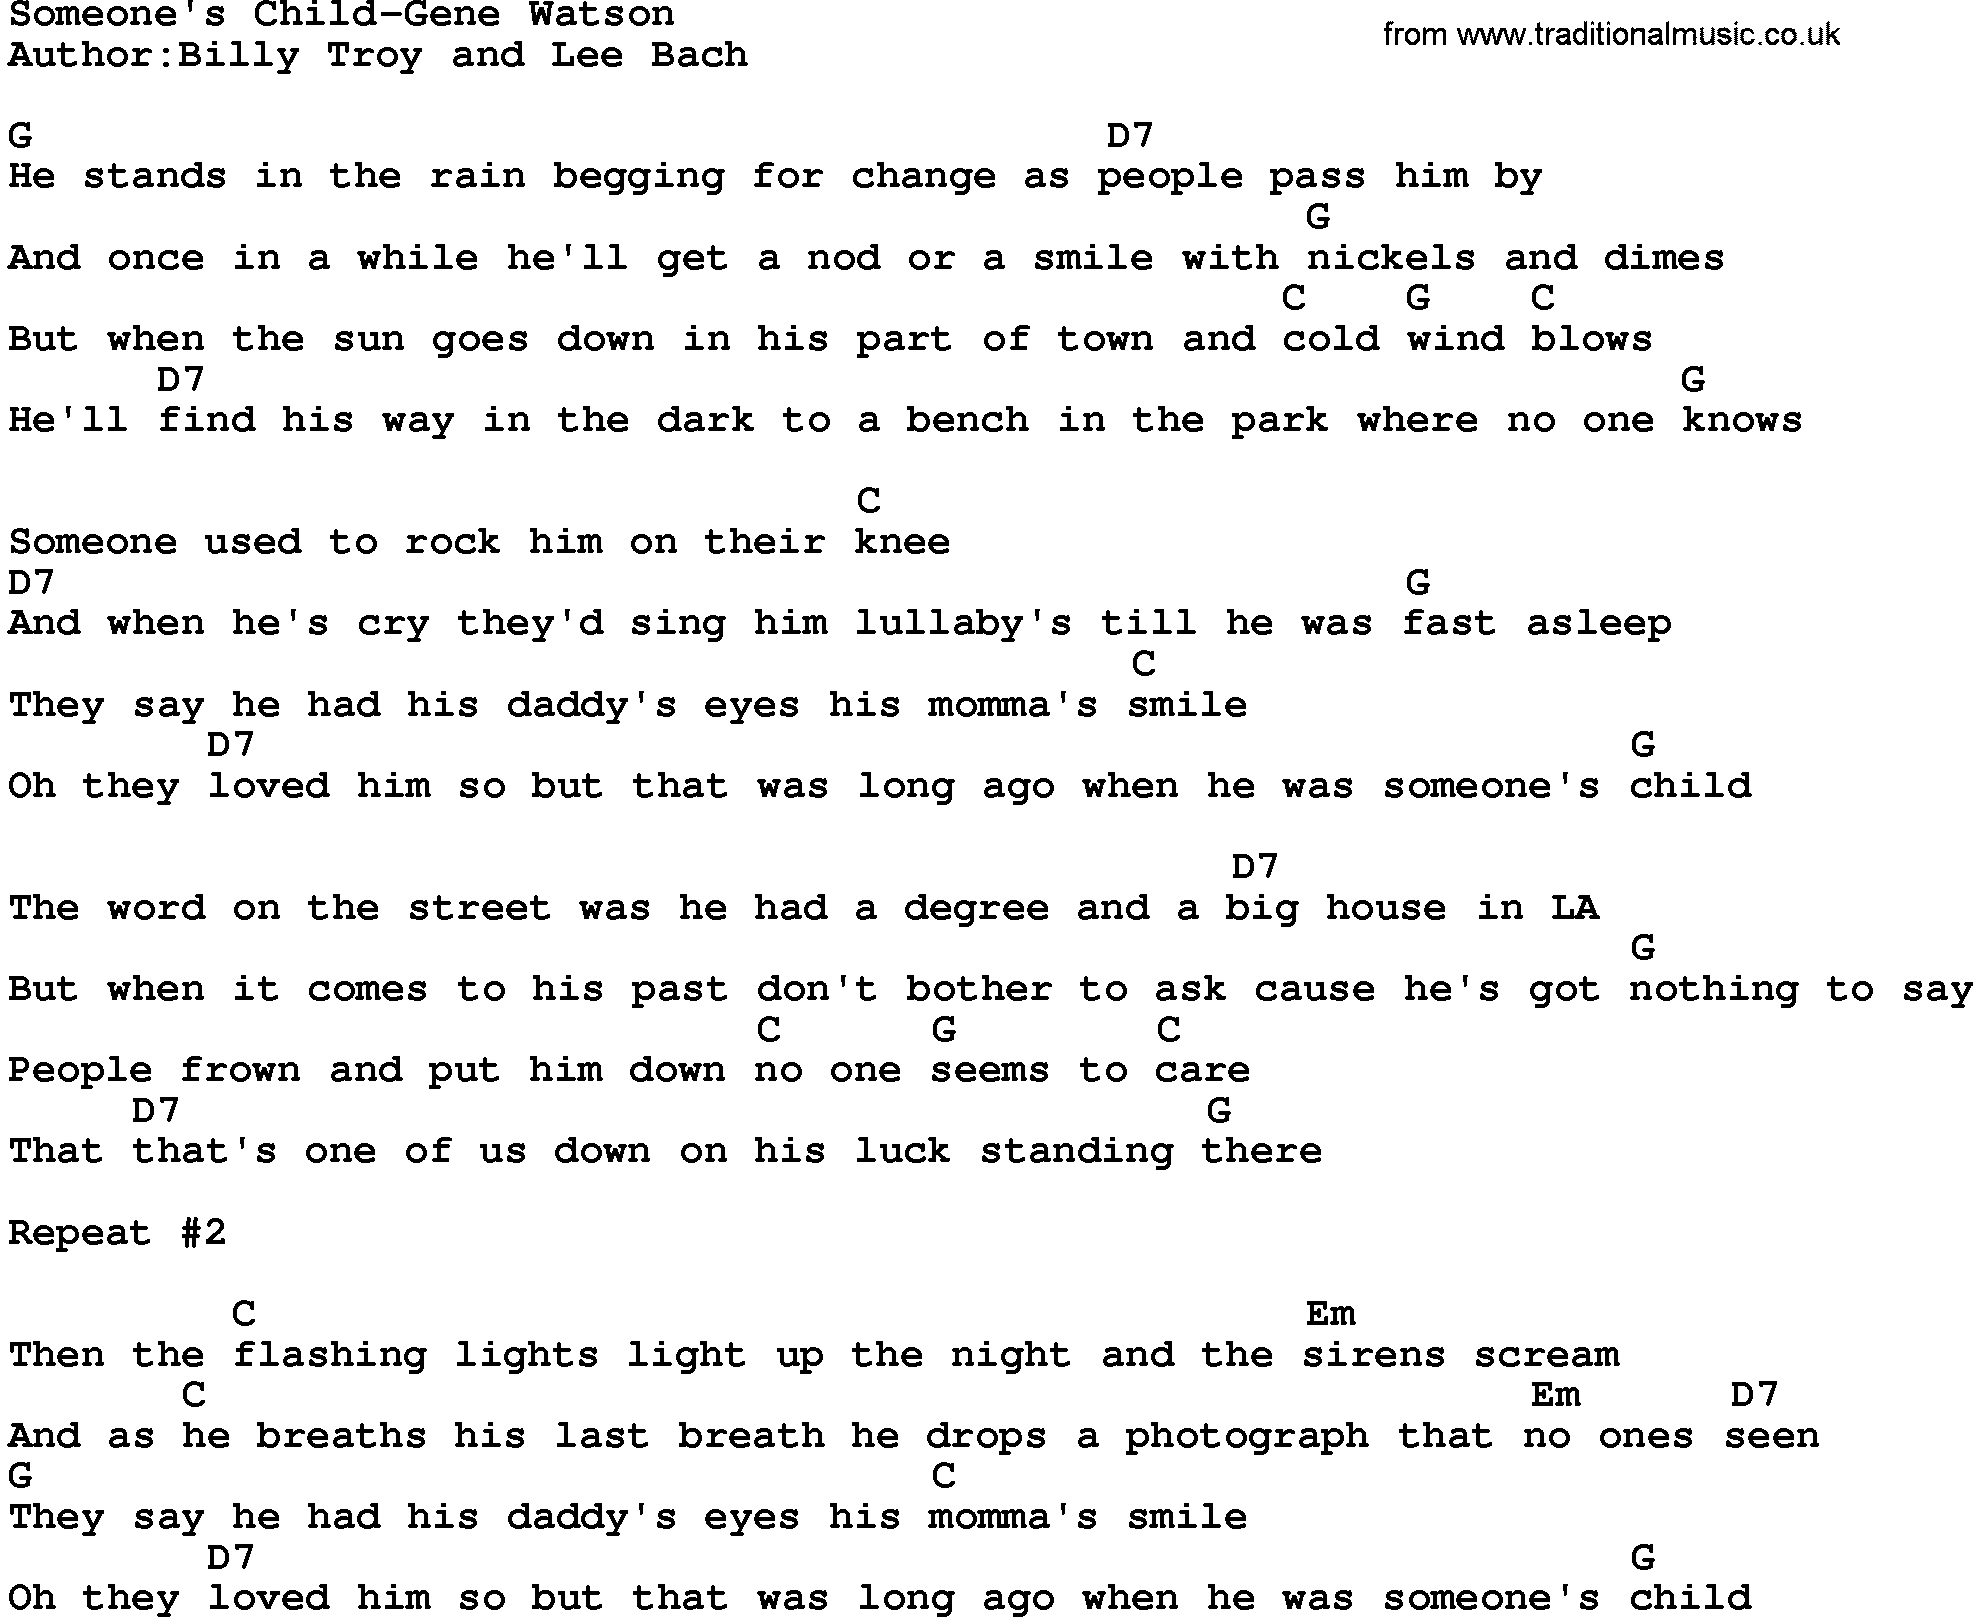 Country music song: Someone's Child-Gene Watson lyrics and chords